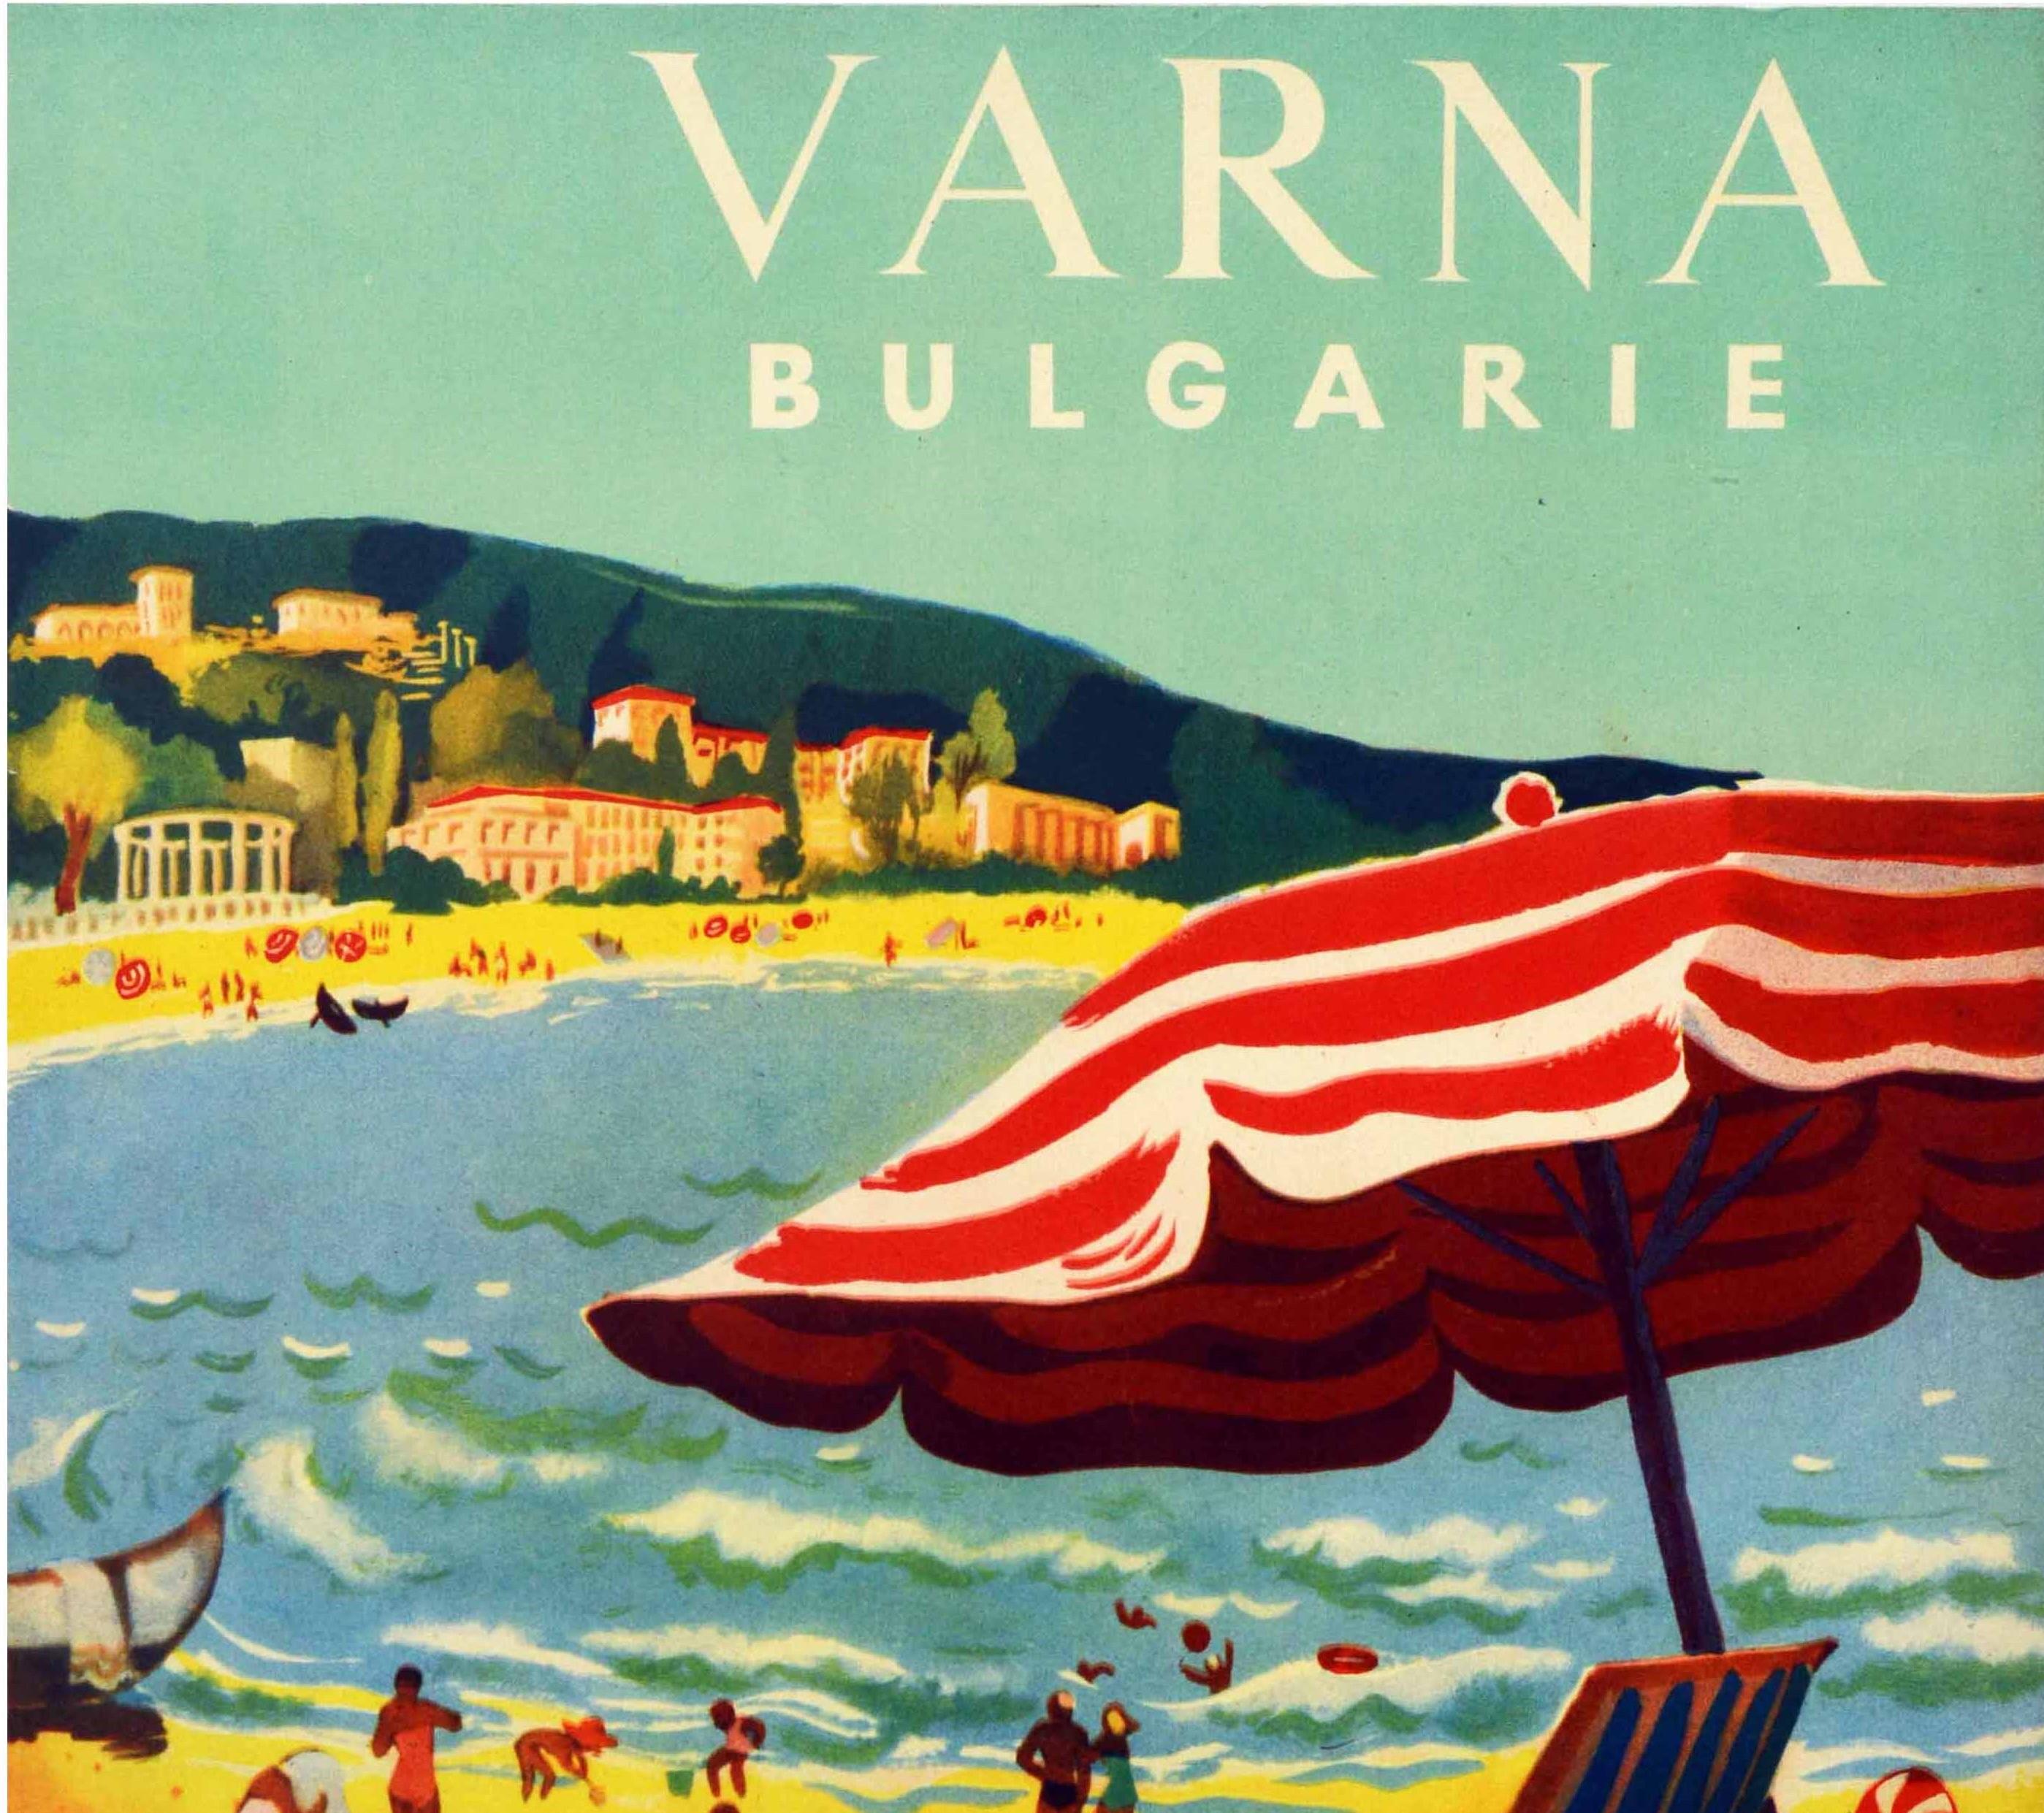 Original Vintage Poster Varna Bulgaria Black Sea Coast Summer Travel Beach Art - Print by Lukowa Petrow